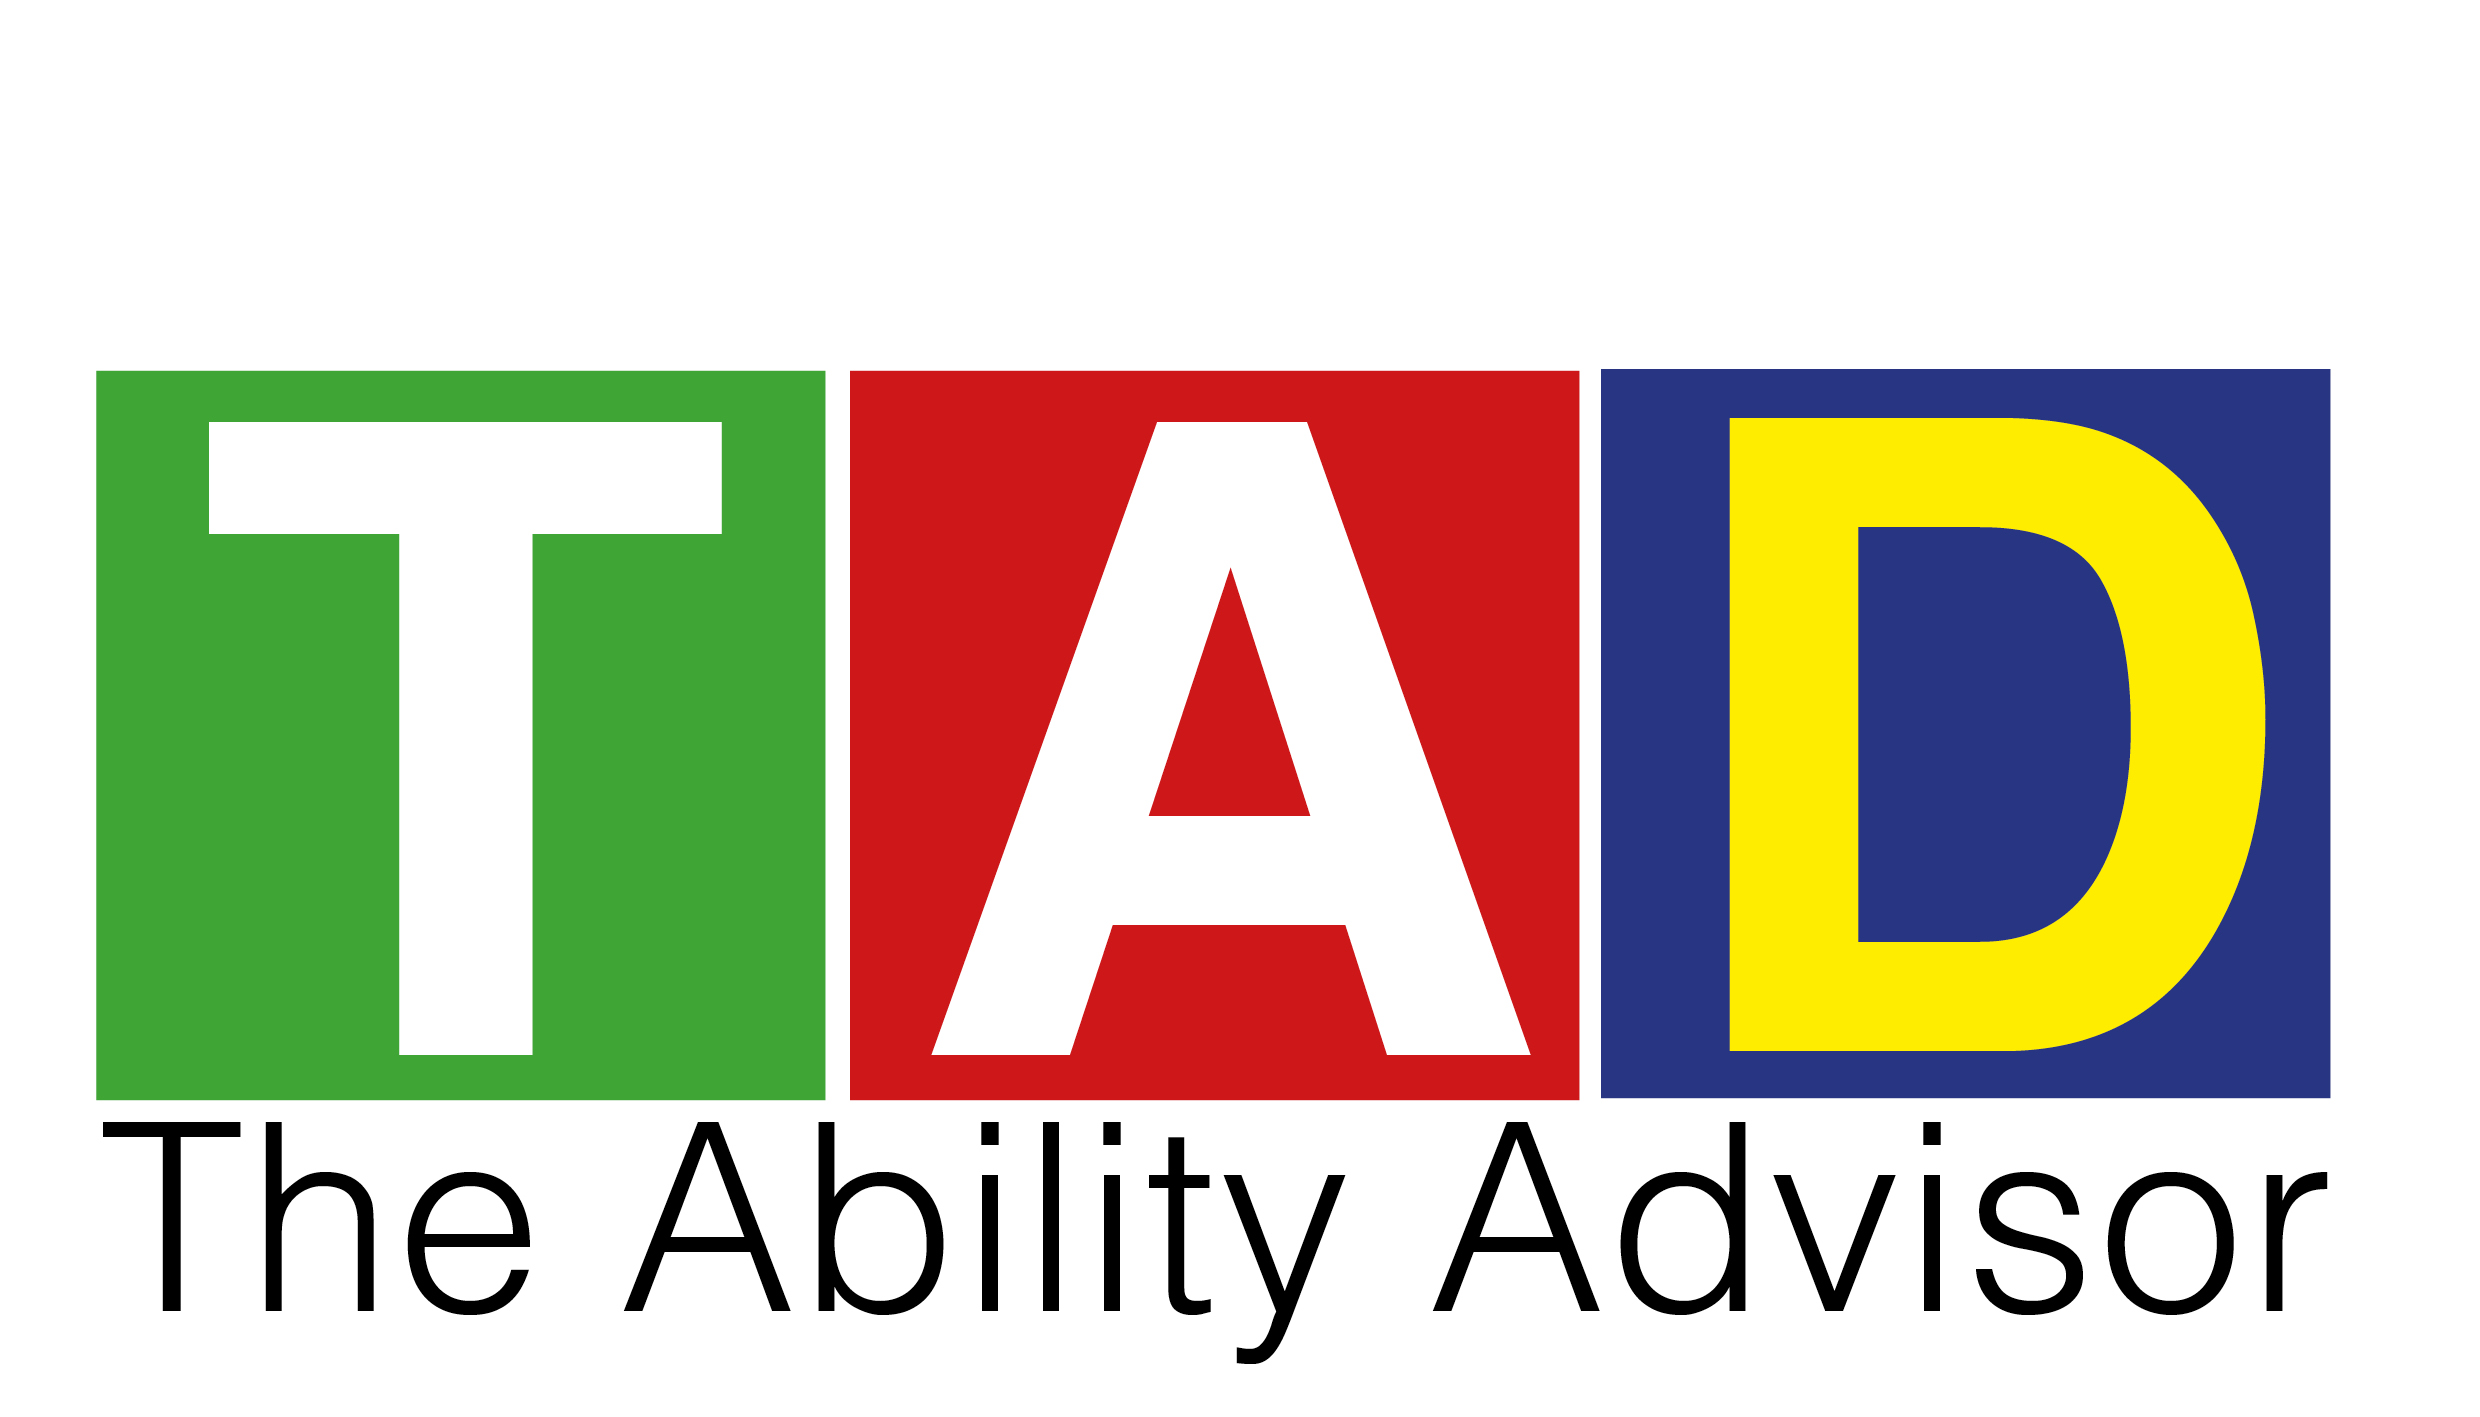 TAD Project Logo